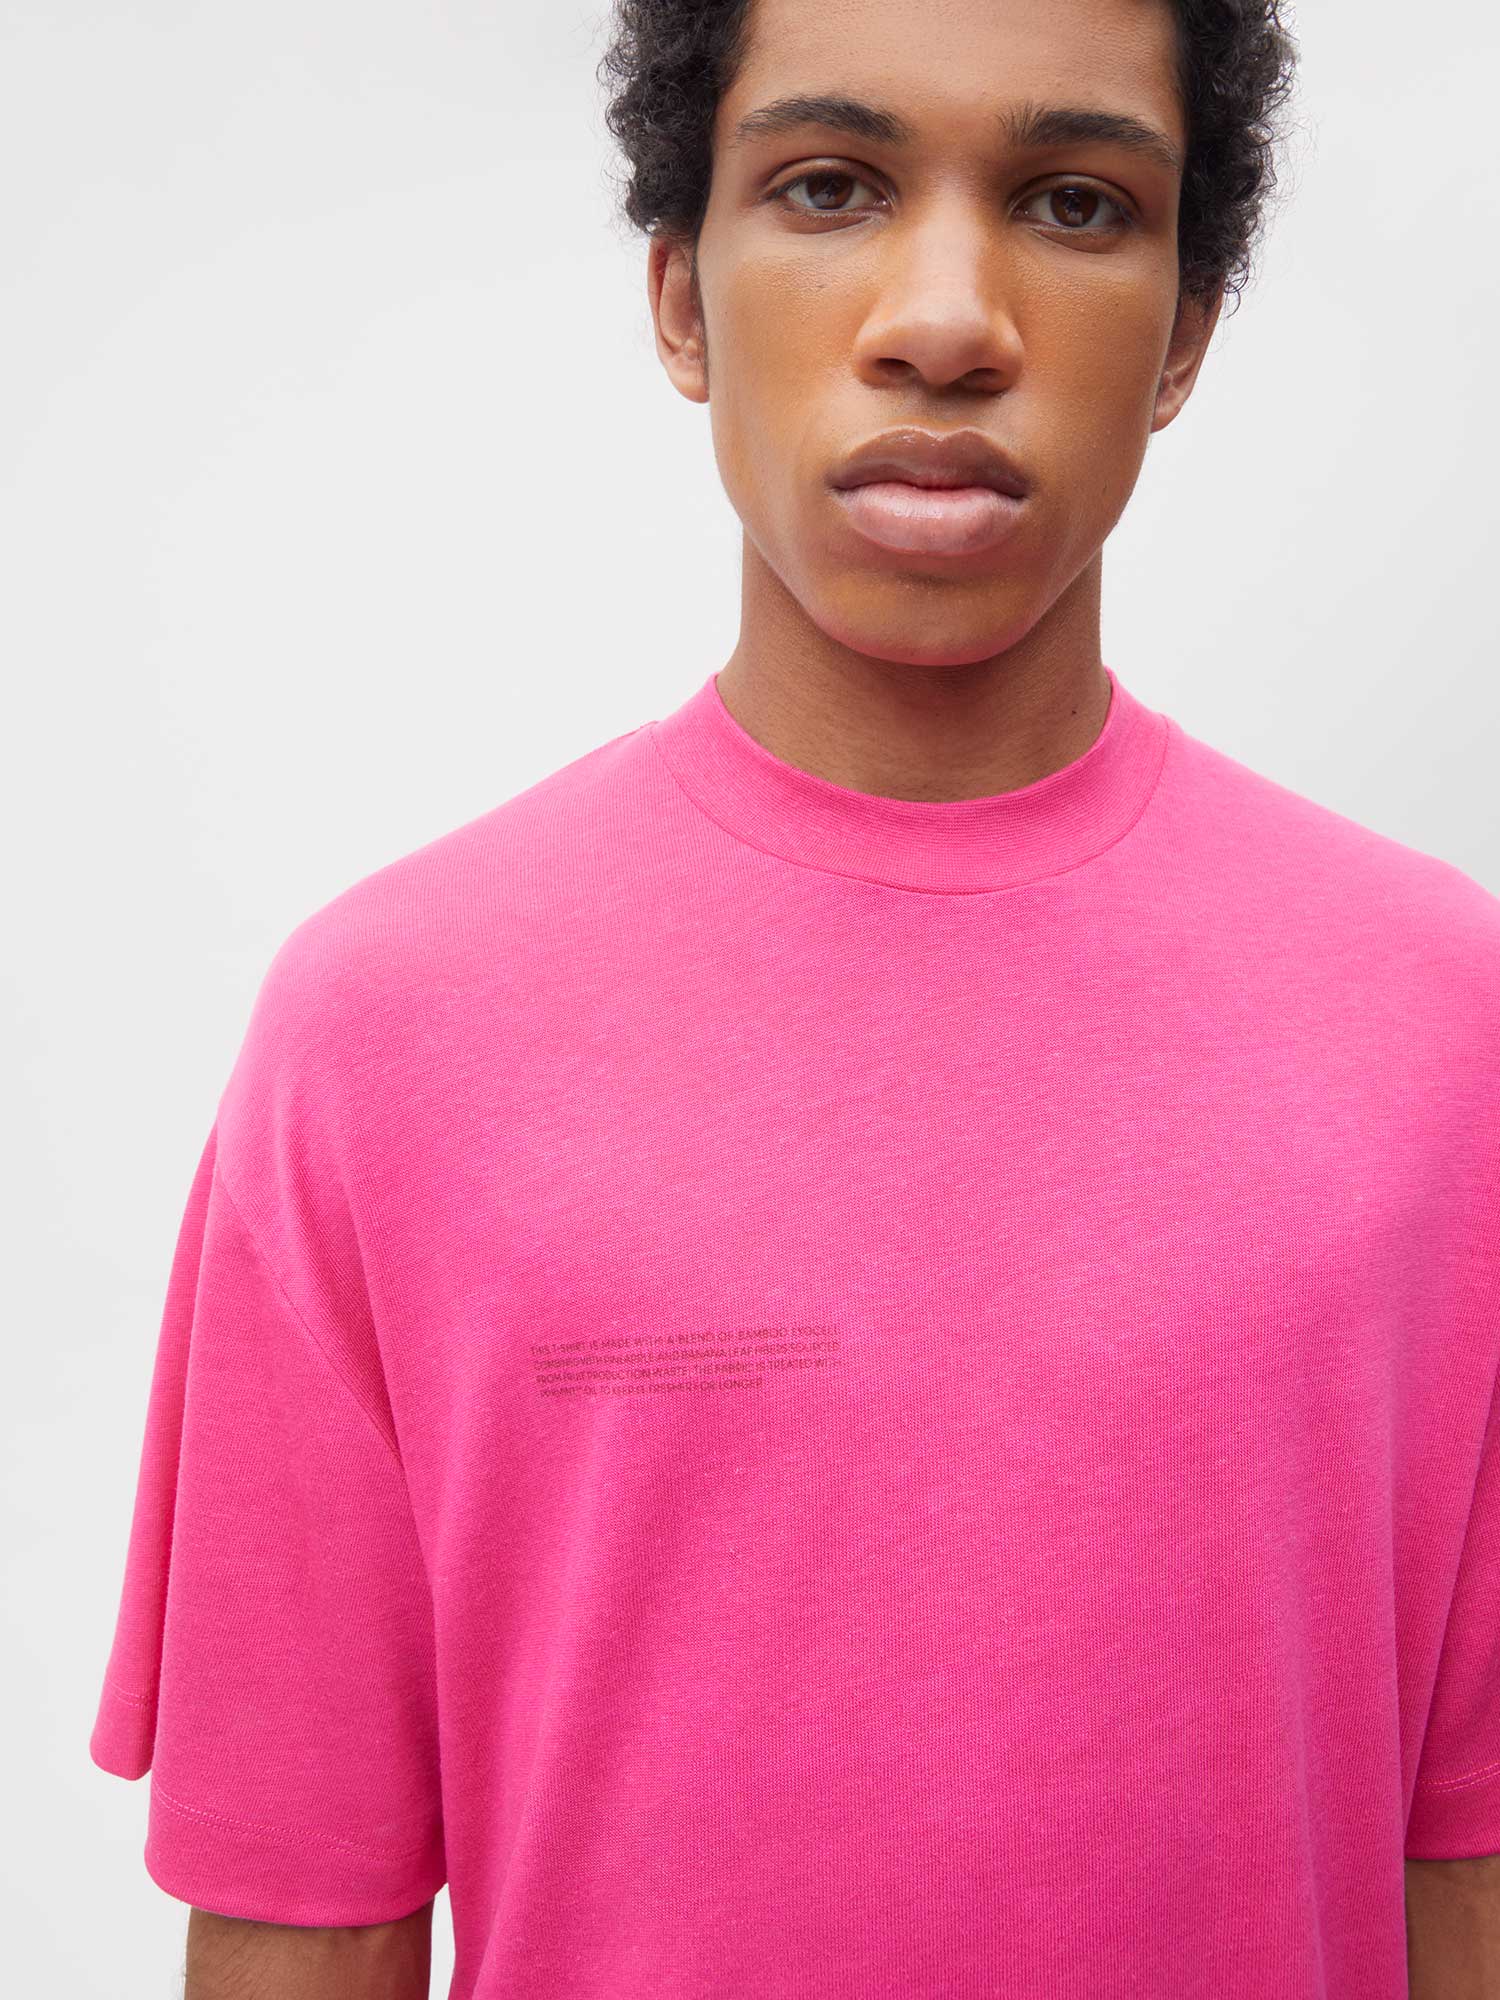 FRUTFIBER-Skater-T-Shirt-Tourmaline-Pink-Male-2